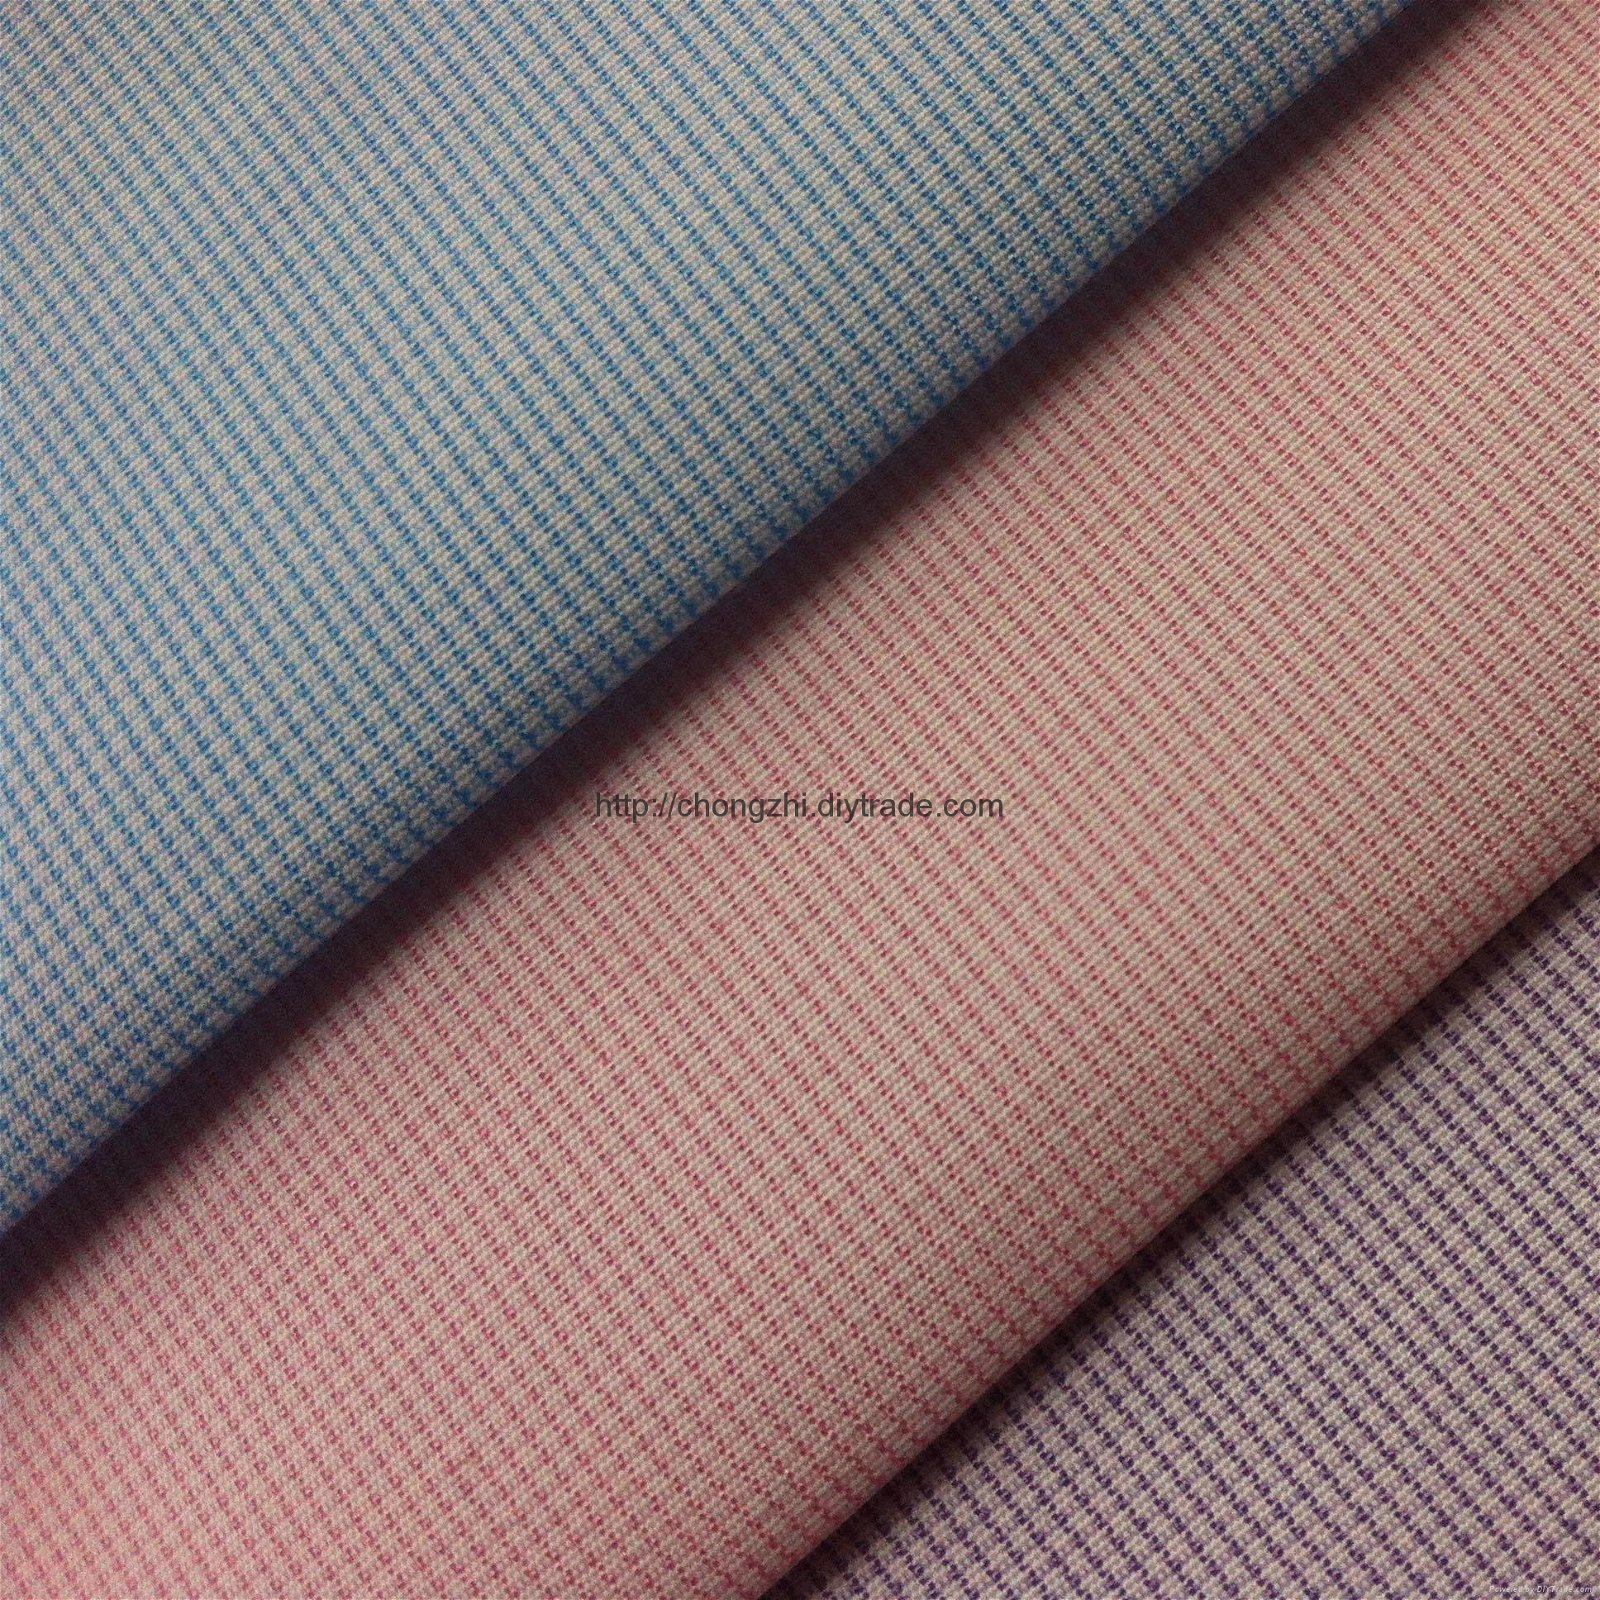 Striped shirt fabric 4